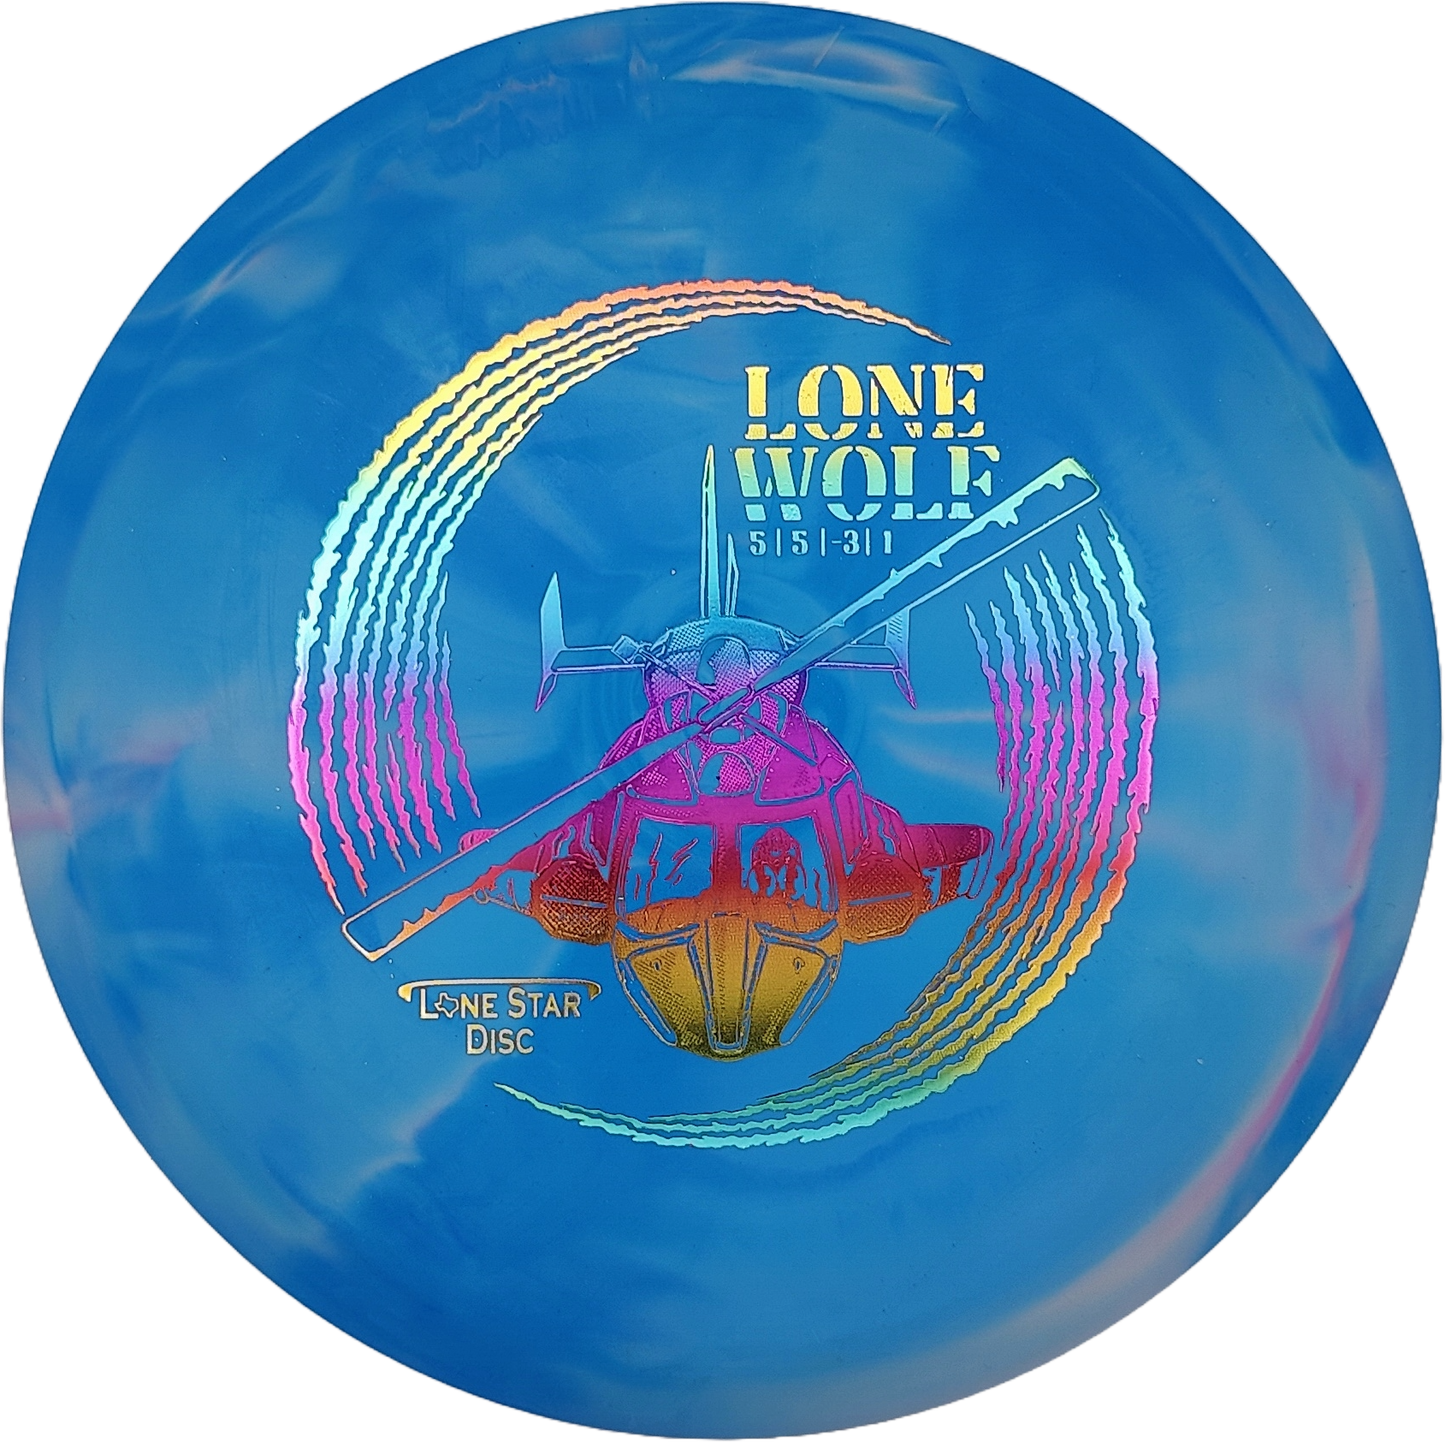 Lone Star Disc Lone Wolf Delta 1